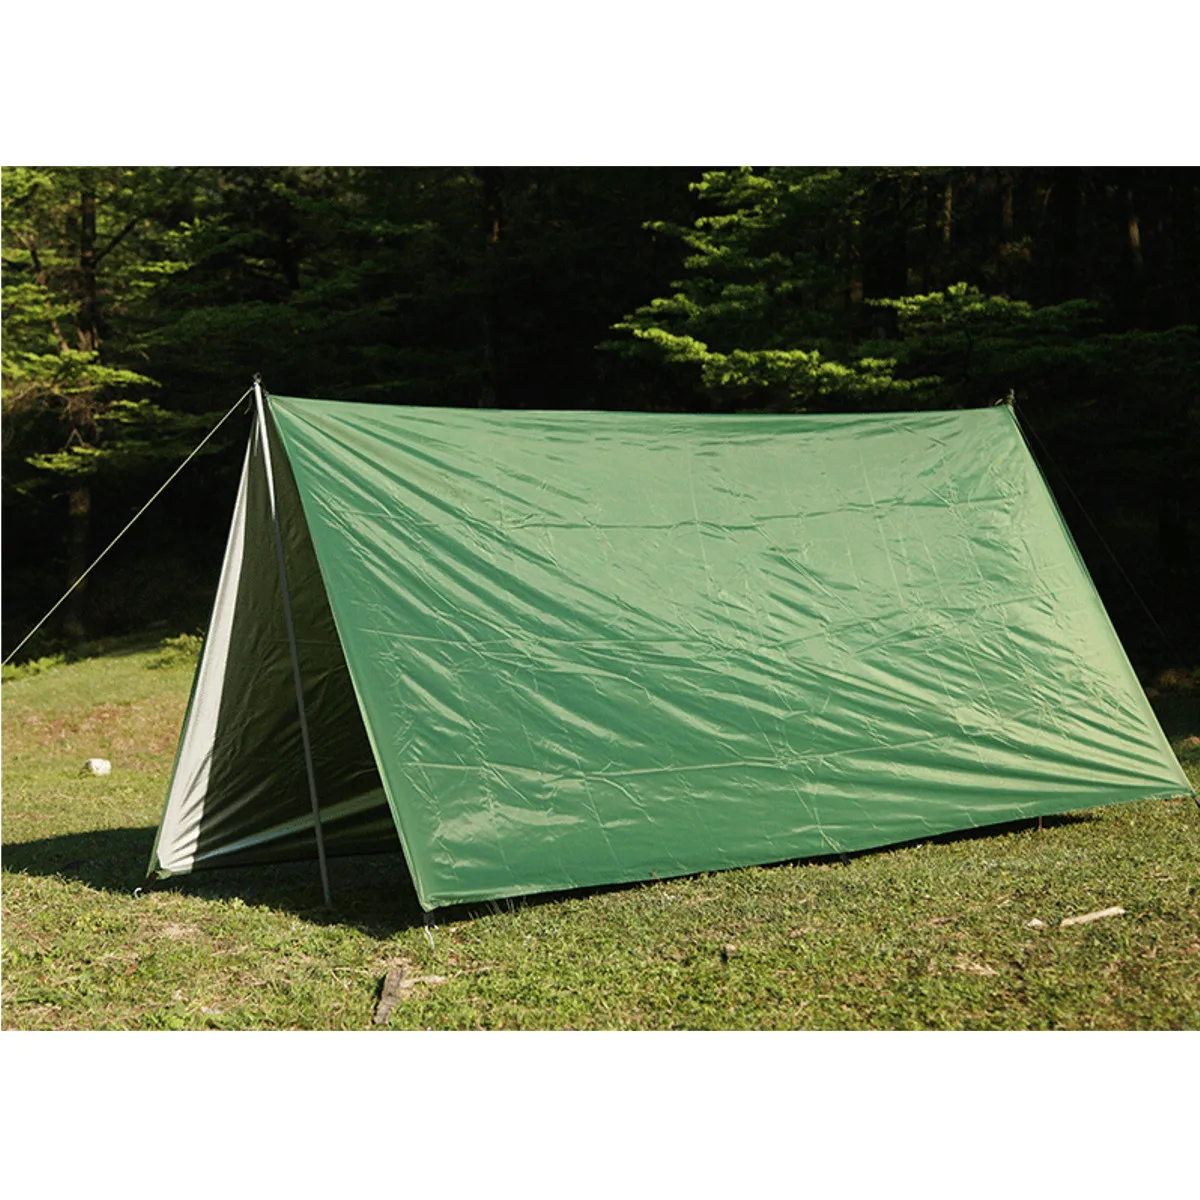 3 m x 3 m للماء الشمس المأوى قماش القنب بقاء التخييم تسلق في الهواء الطلق خيمة الباحة الشمس الظل المظلة مظلة حديقة خيمة الظل